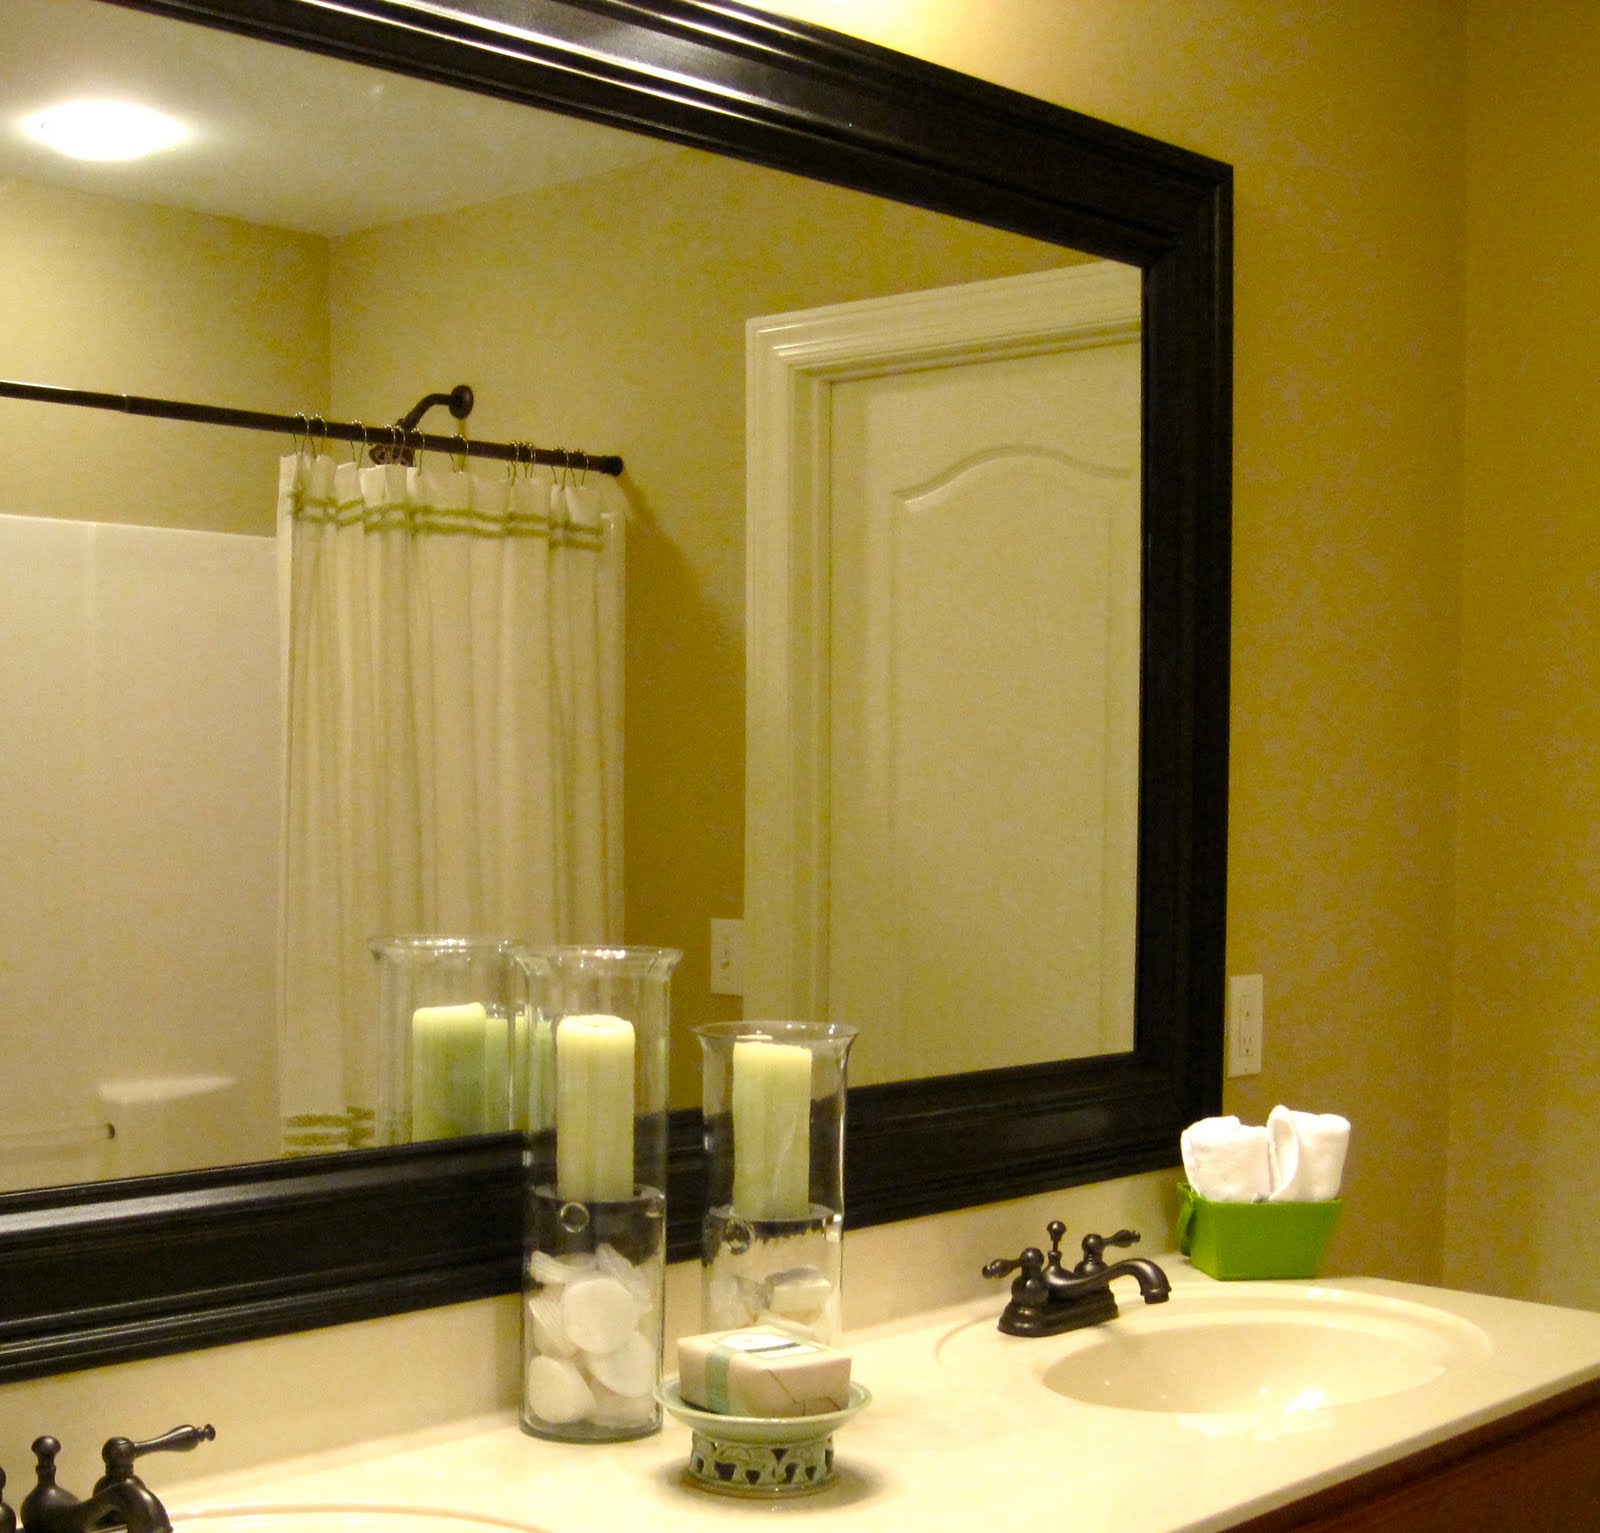 Bathroom-Vanity-Mirror-Replacement-Ideas